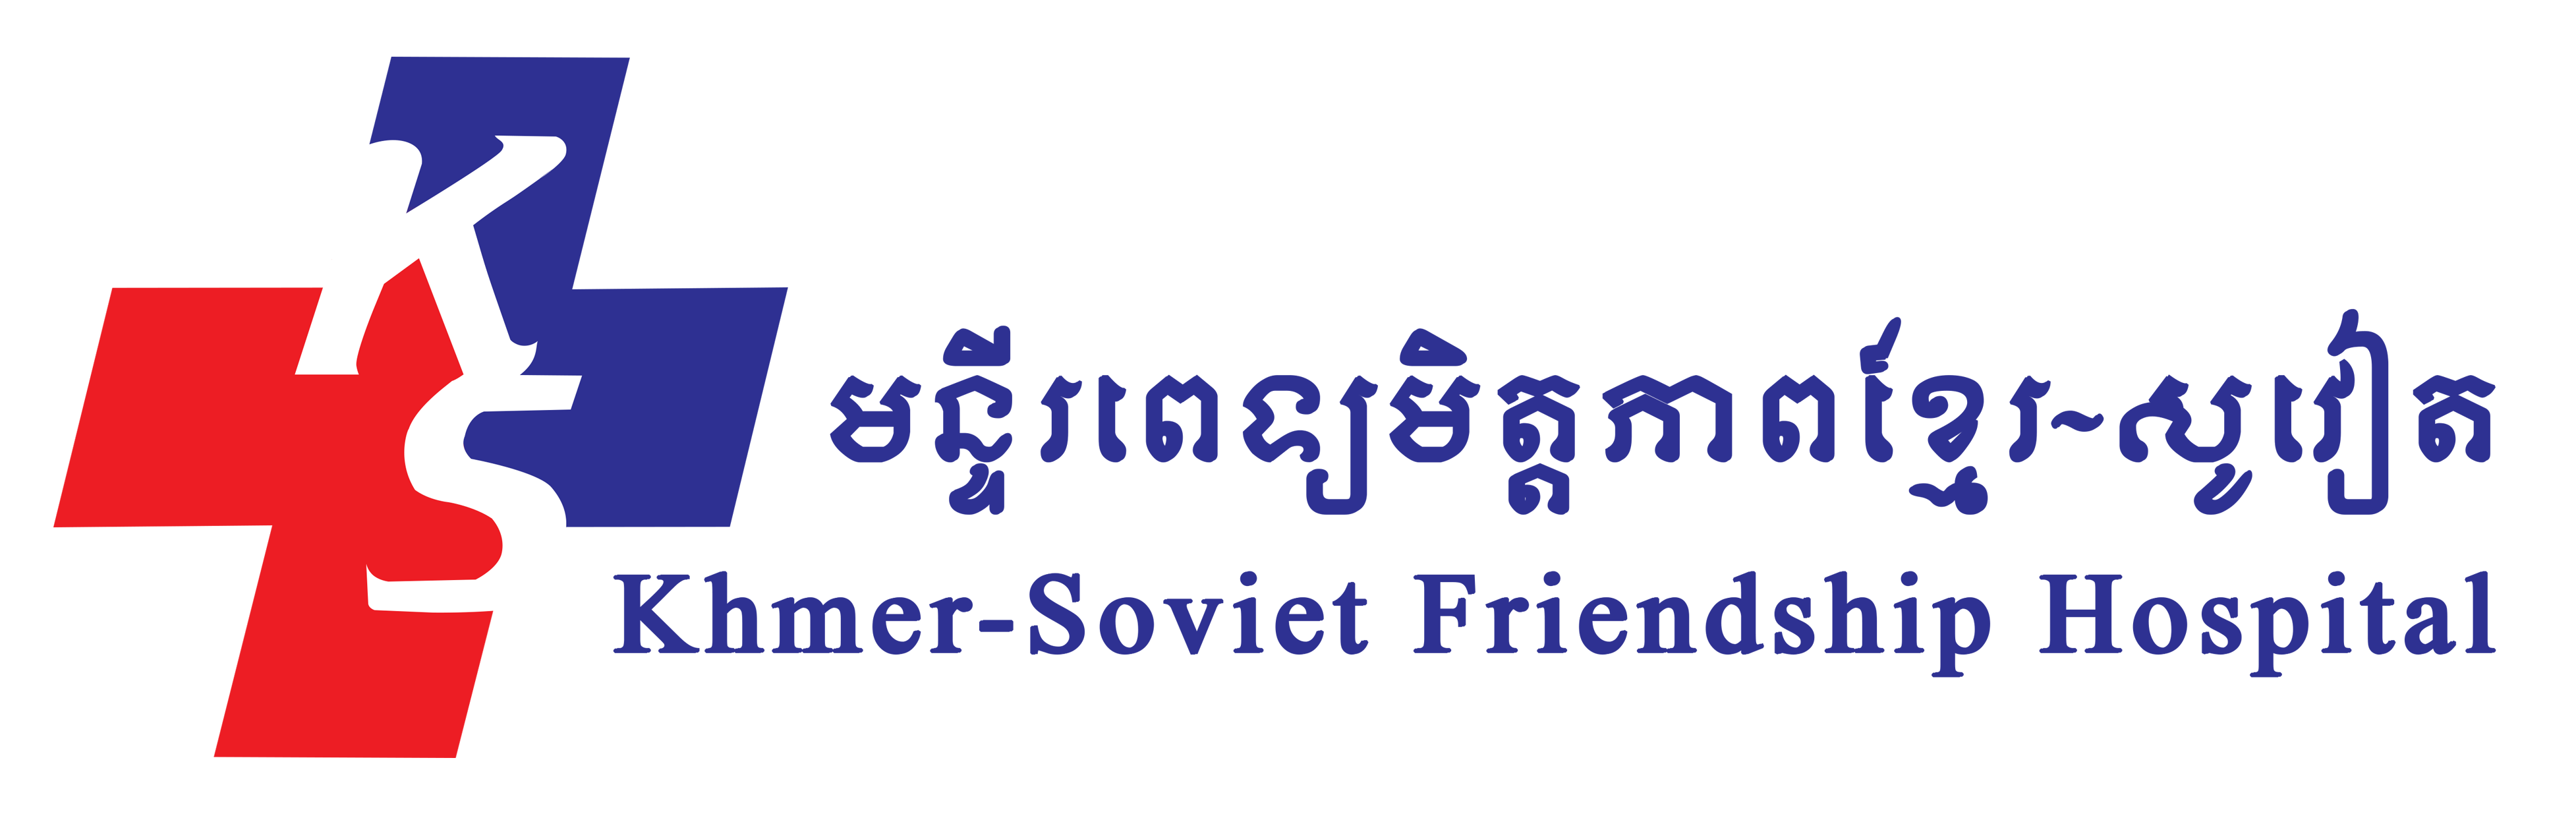 Khmer Soviet Friendship Hospital